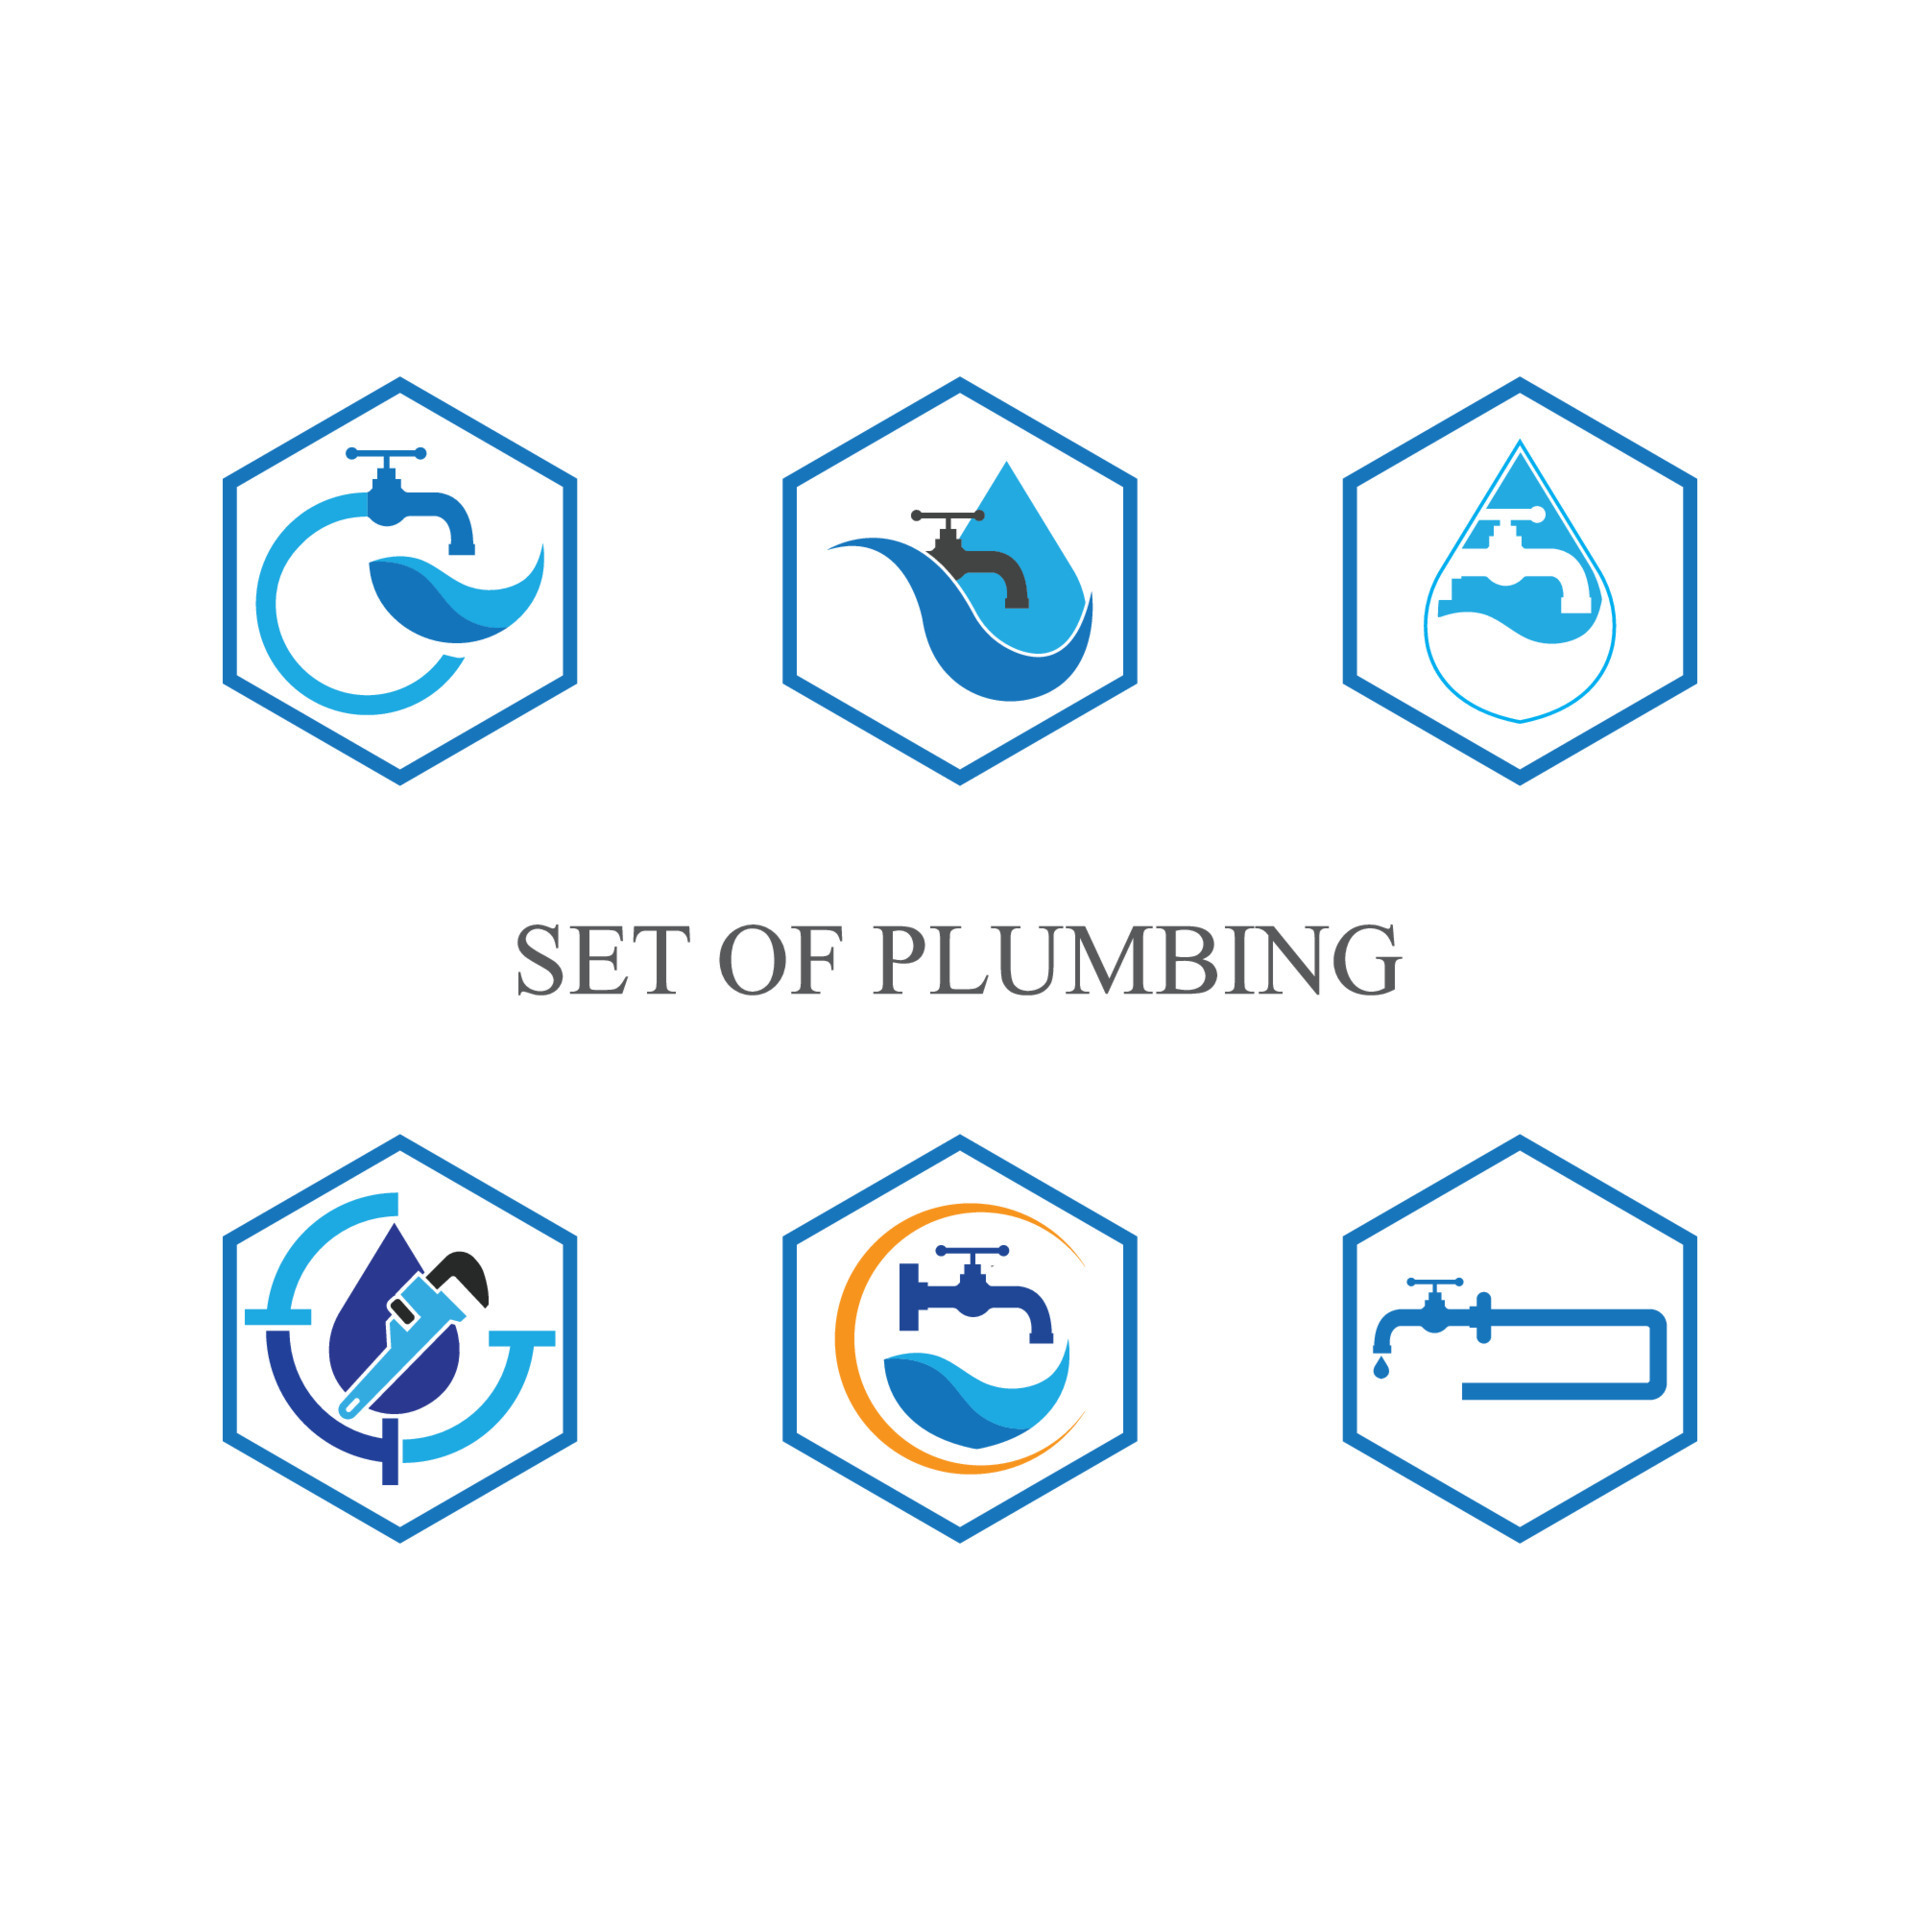 Plumbing service icon logo creative vector illustrattion 22159826 ...